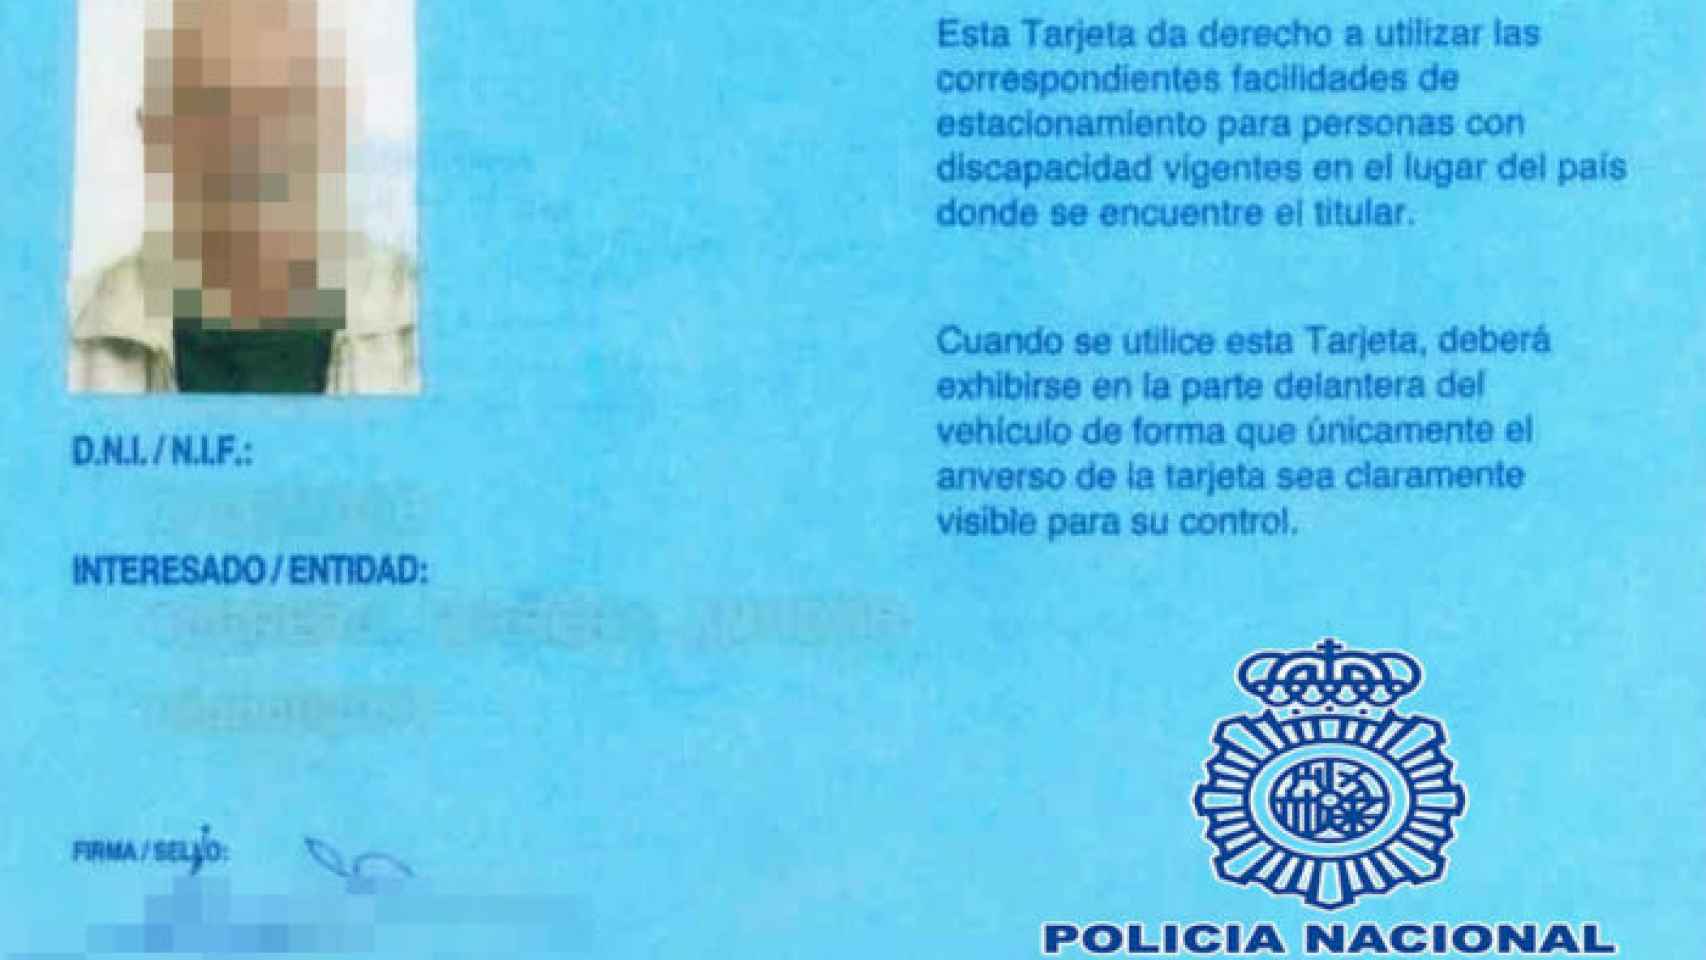 Tarjeta falsa requisada al hombre detenido. foto: Policía Nacional